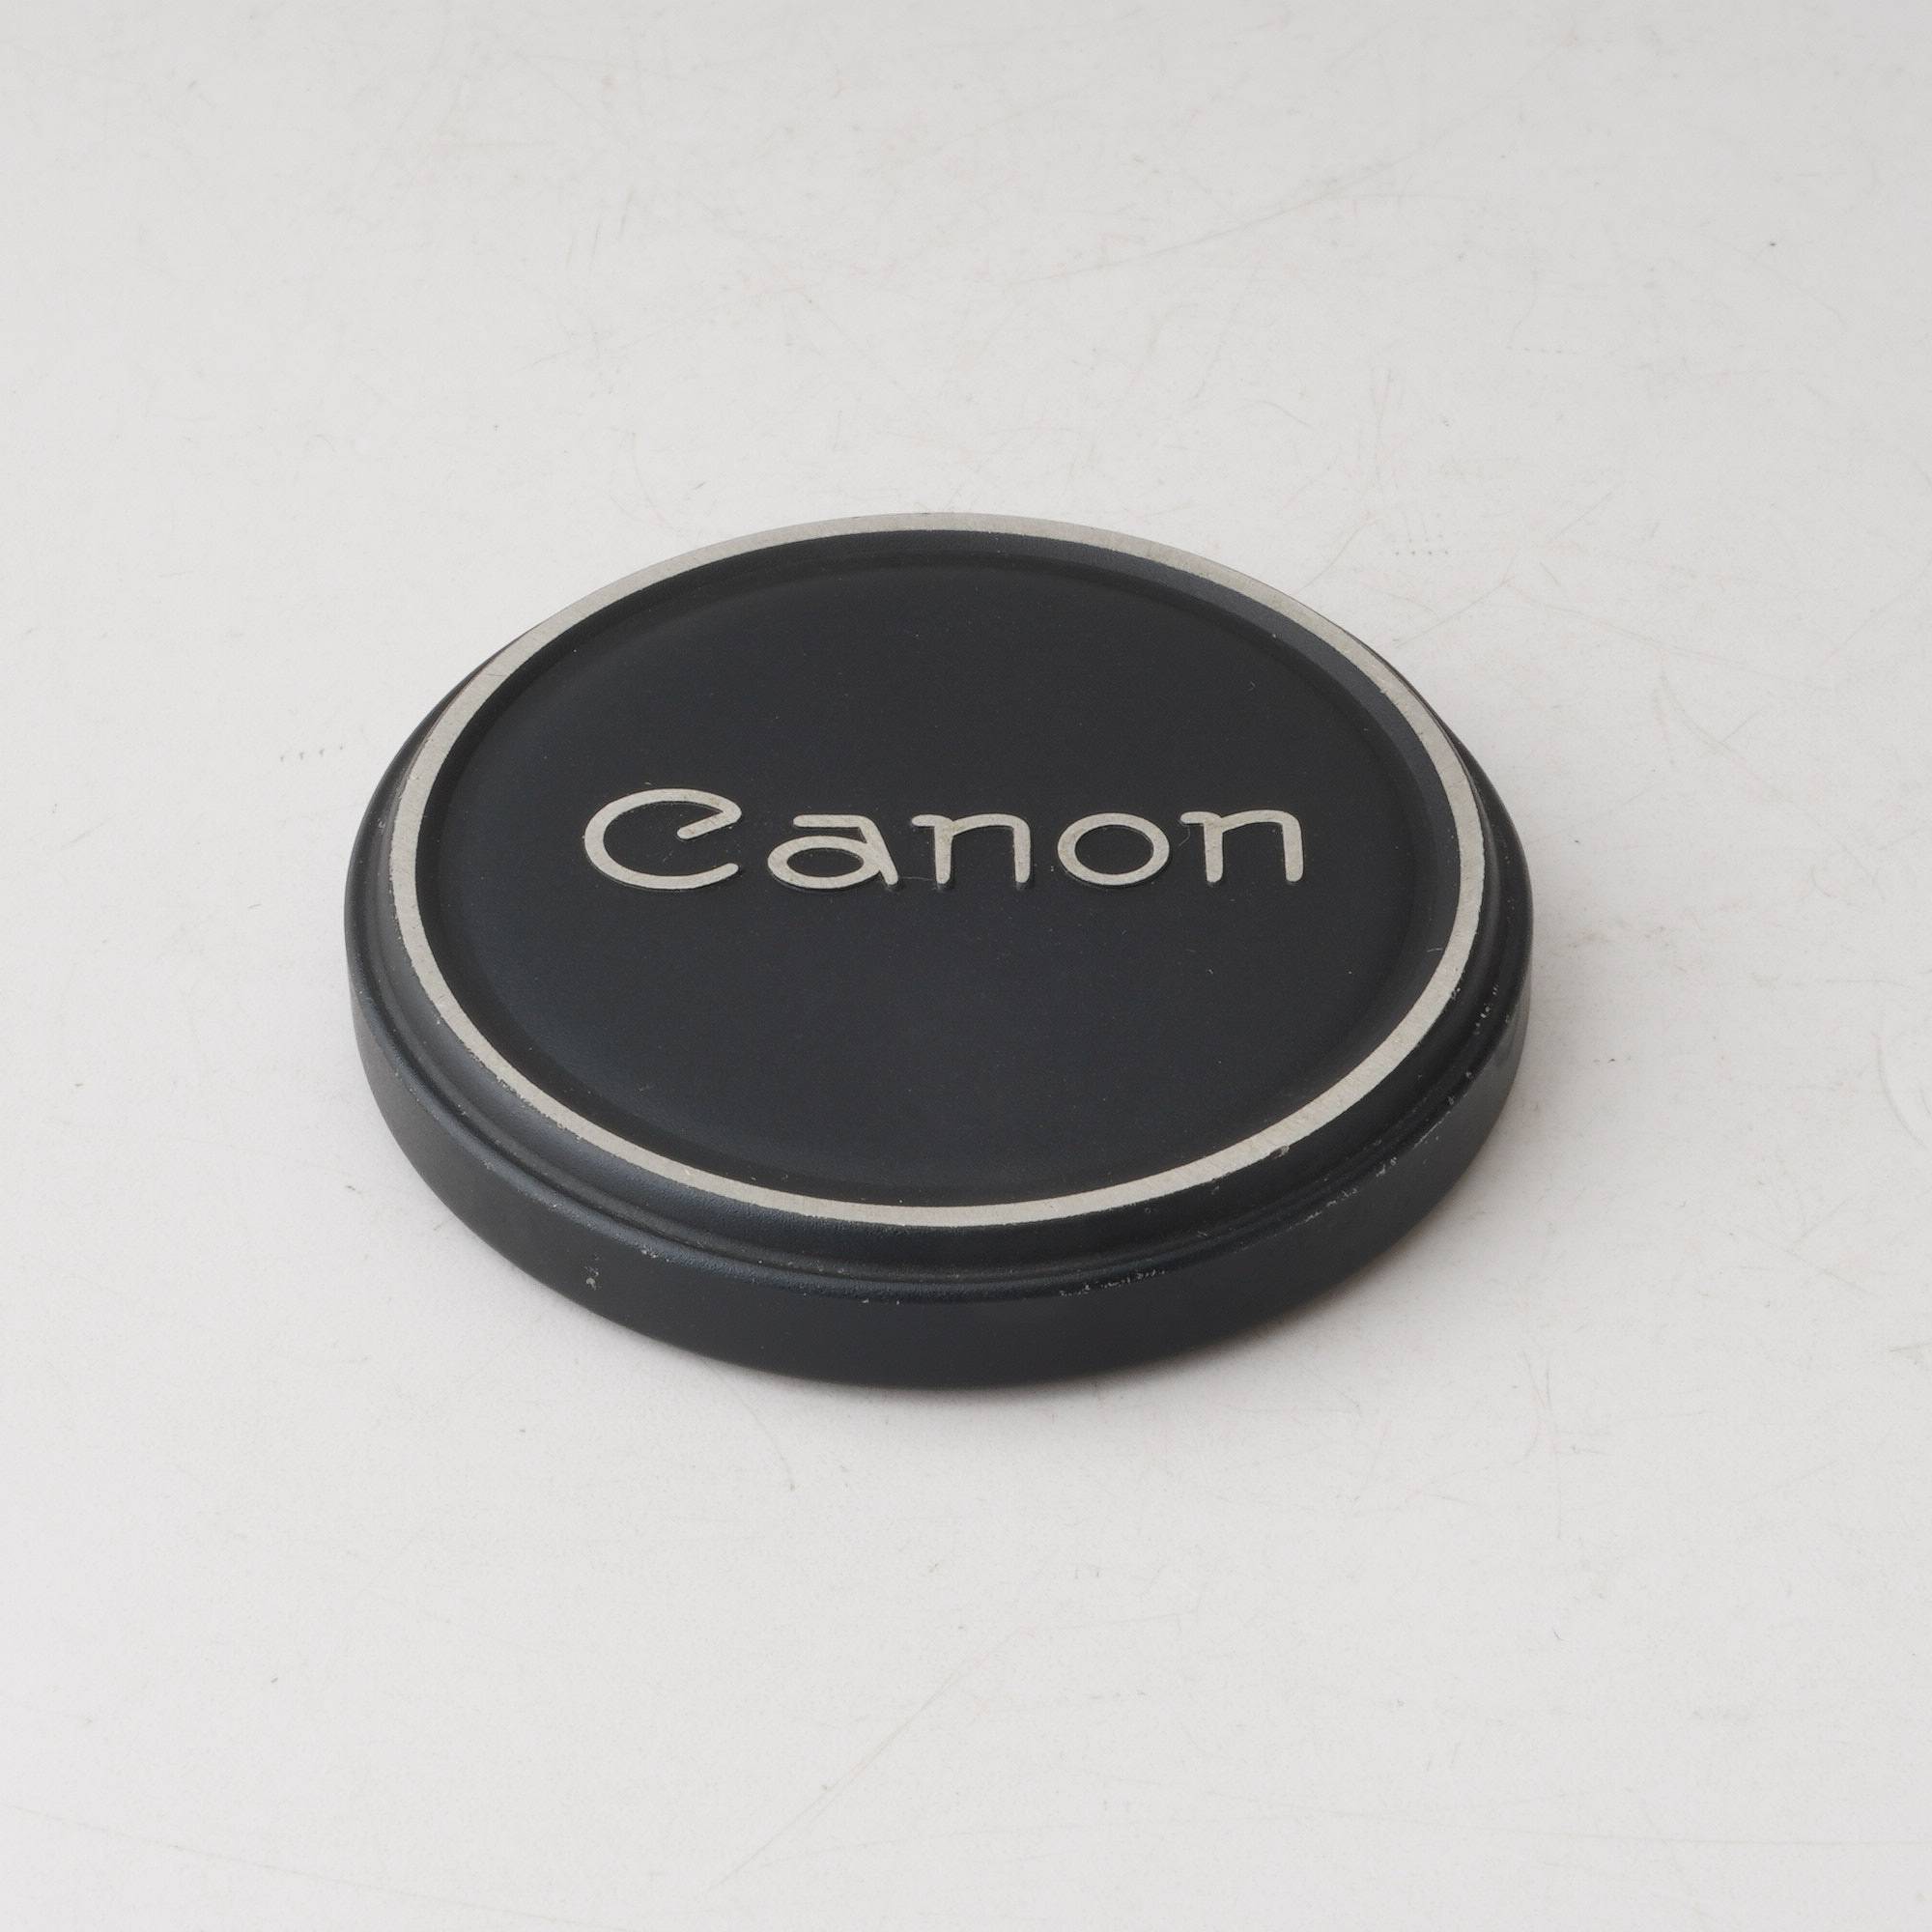  Canon Canon lens cap Metal Lens Cap 48mm